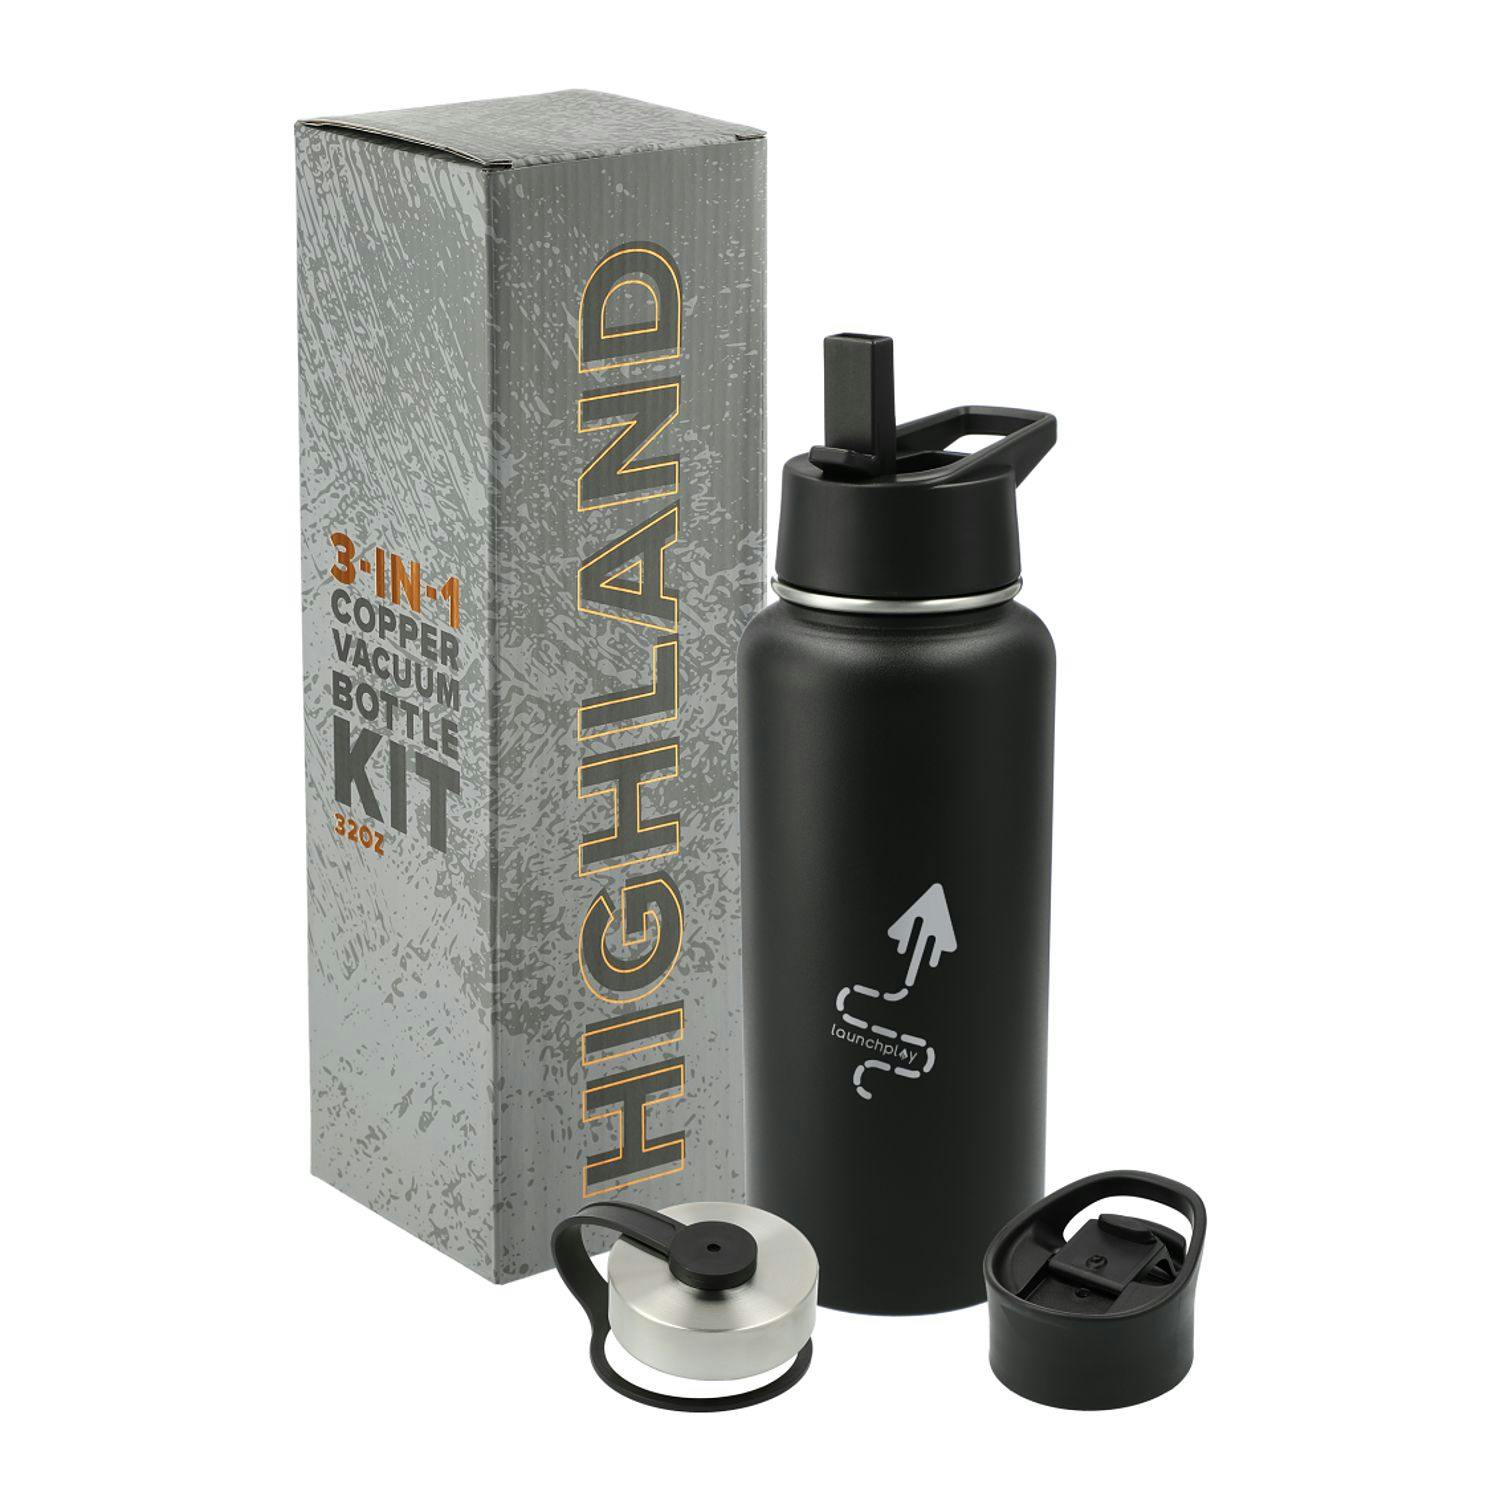 Highland 3-in-1 Copper Vacuum Bottle Kit 32oz - additional Image 6